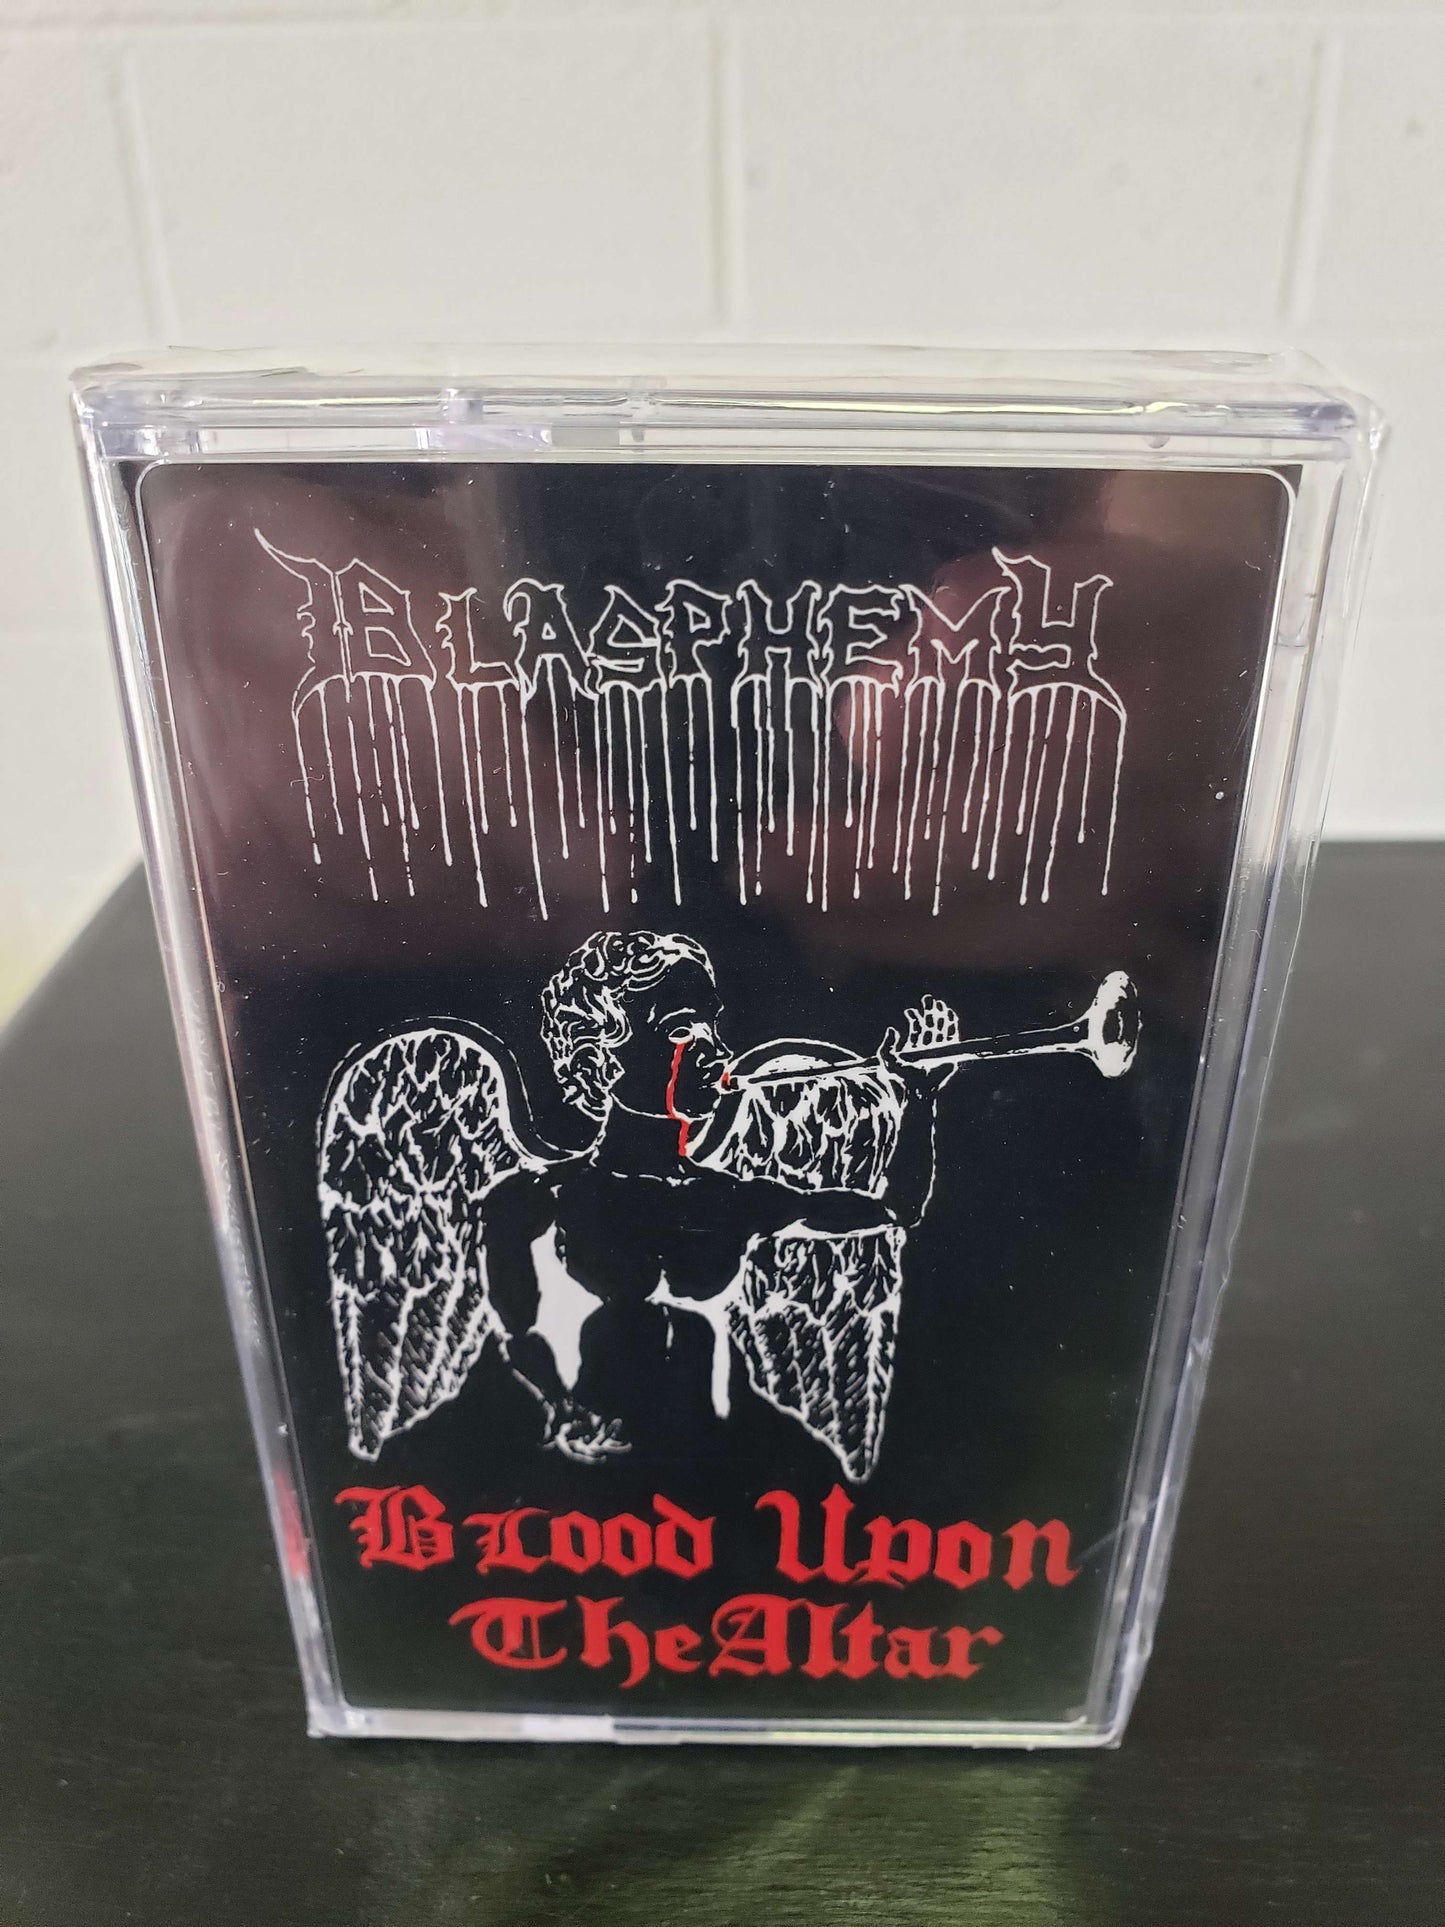 Blasphemy - Blood Upon the Altar cassette tape